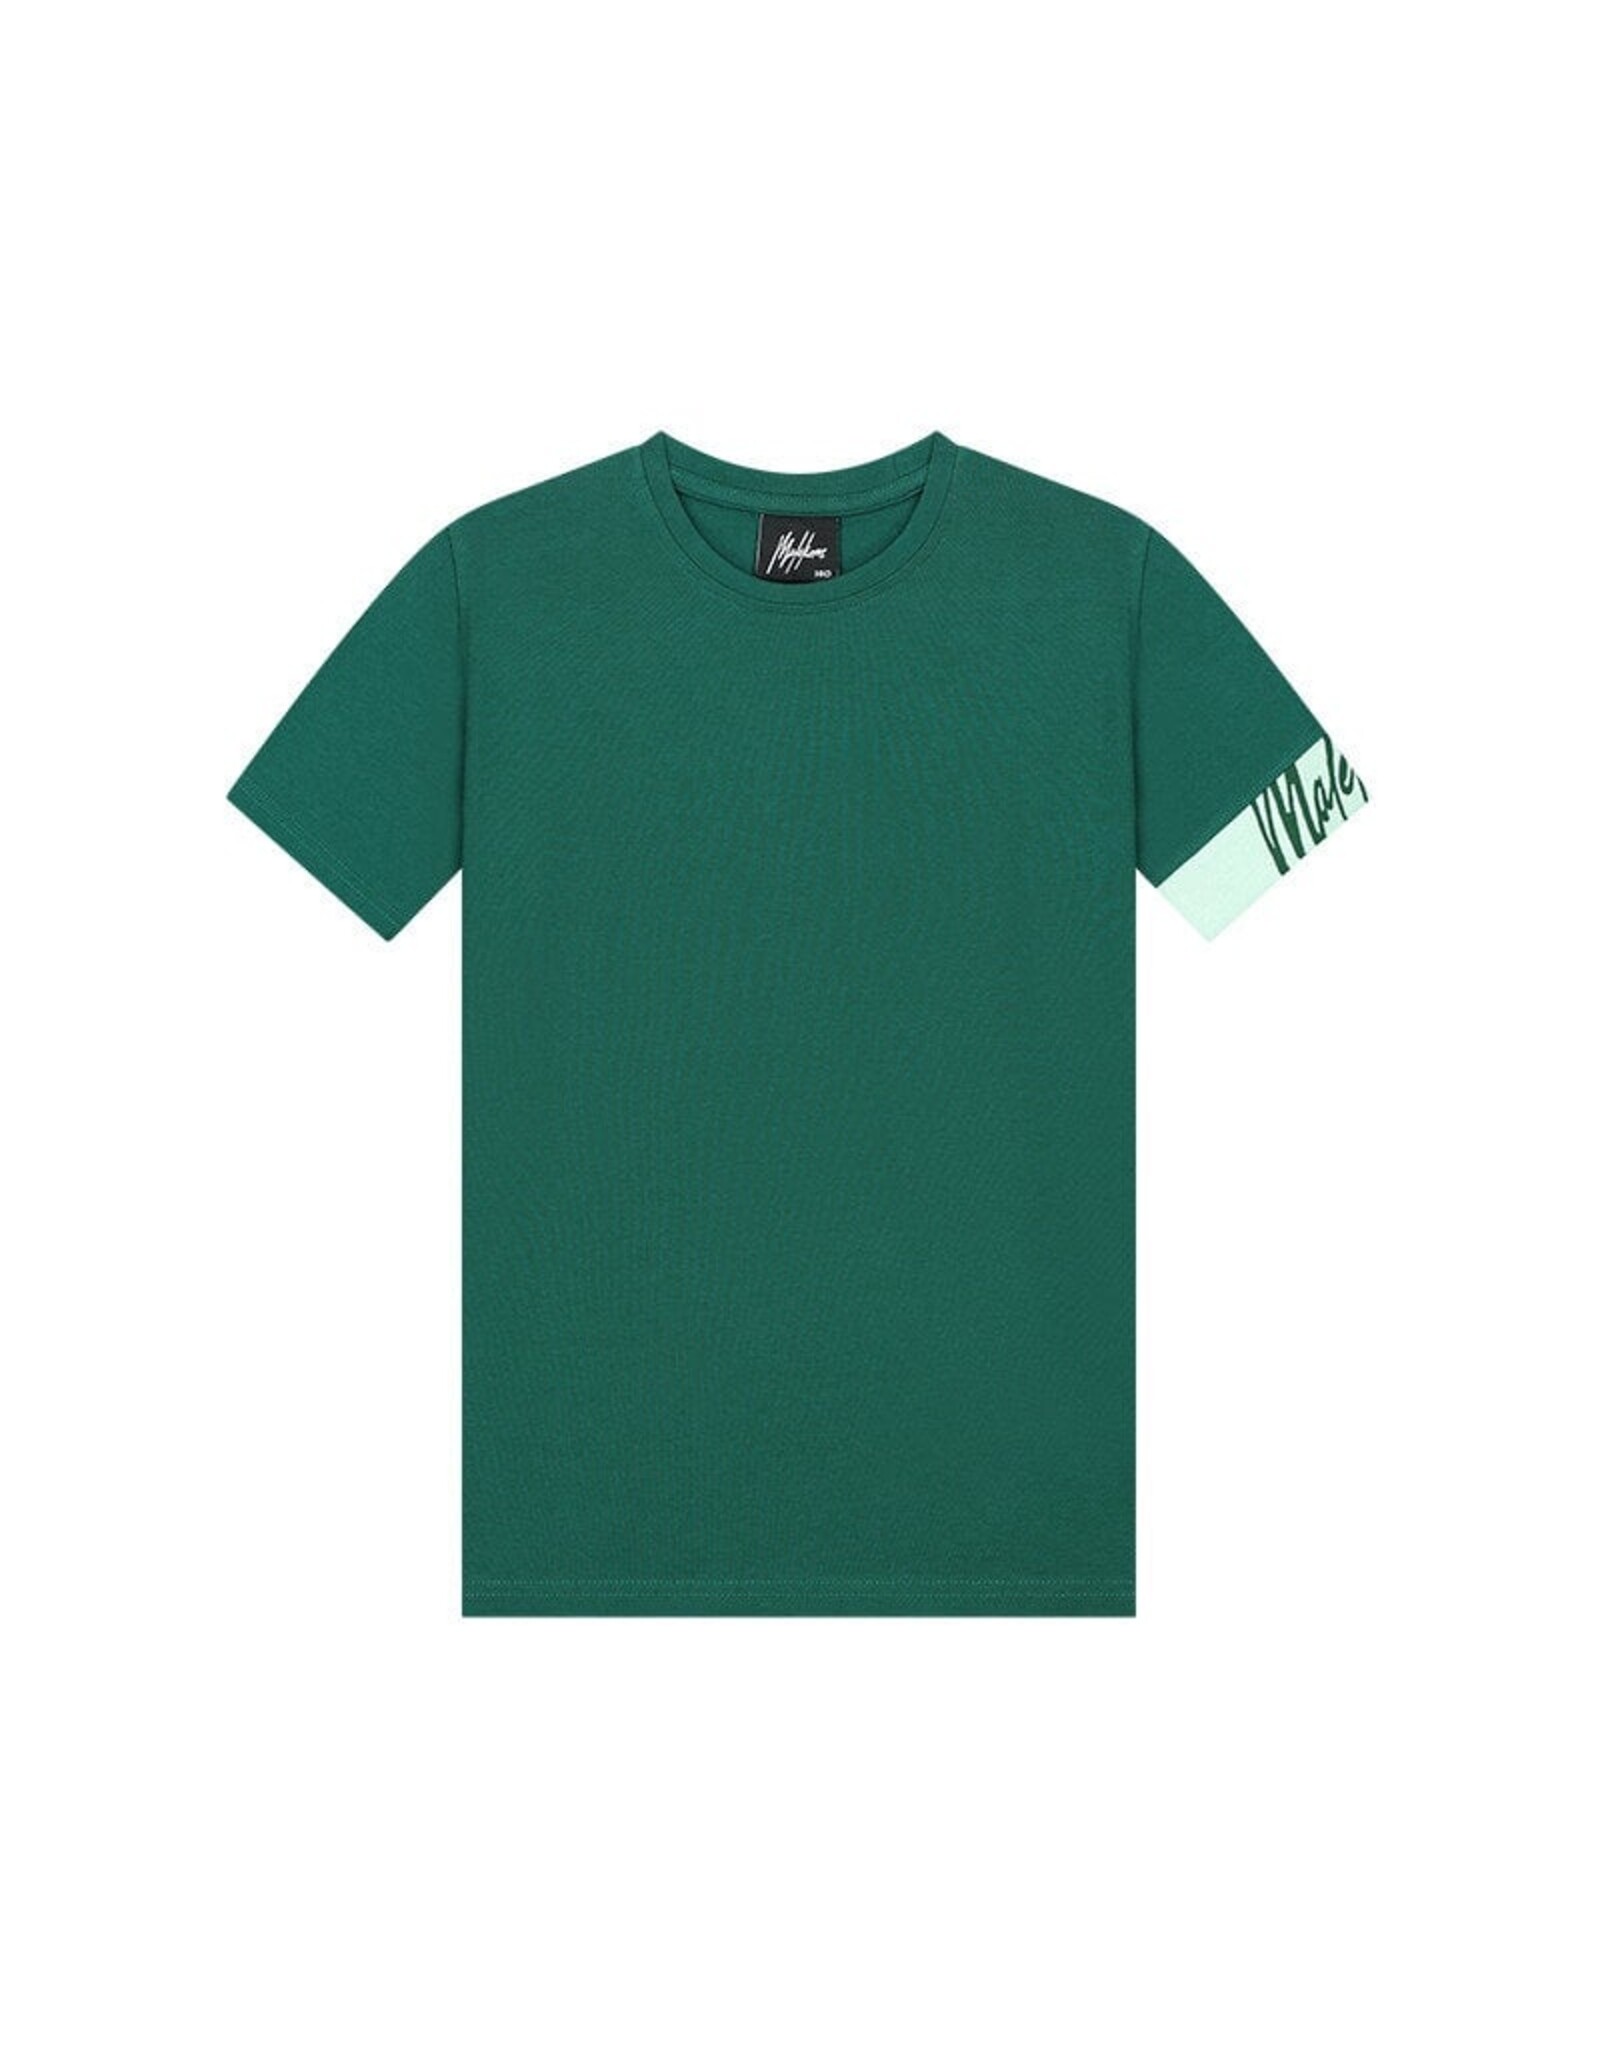 Malelions Malelions Junior Captain T-Shirt 2.0 Dark Green/Mint MJ1-SS24-25